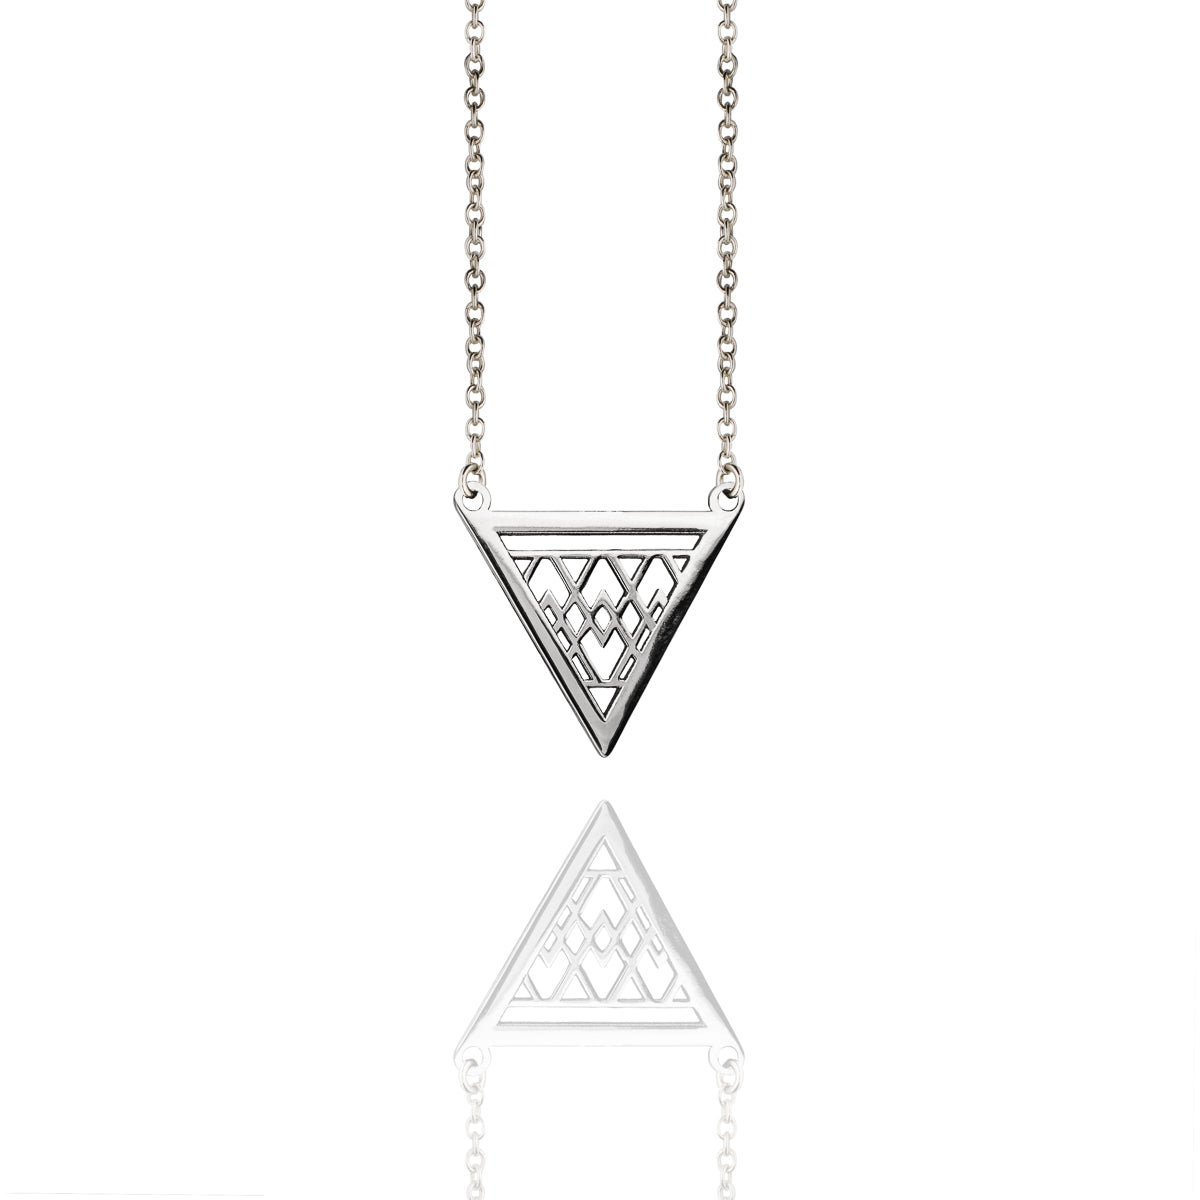 Porterness Studio Sterling Silver Triangle Necklace